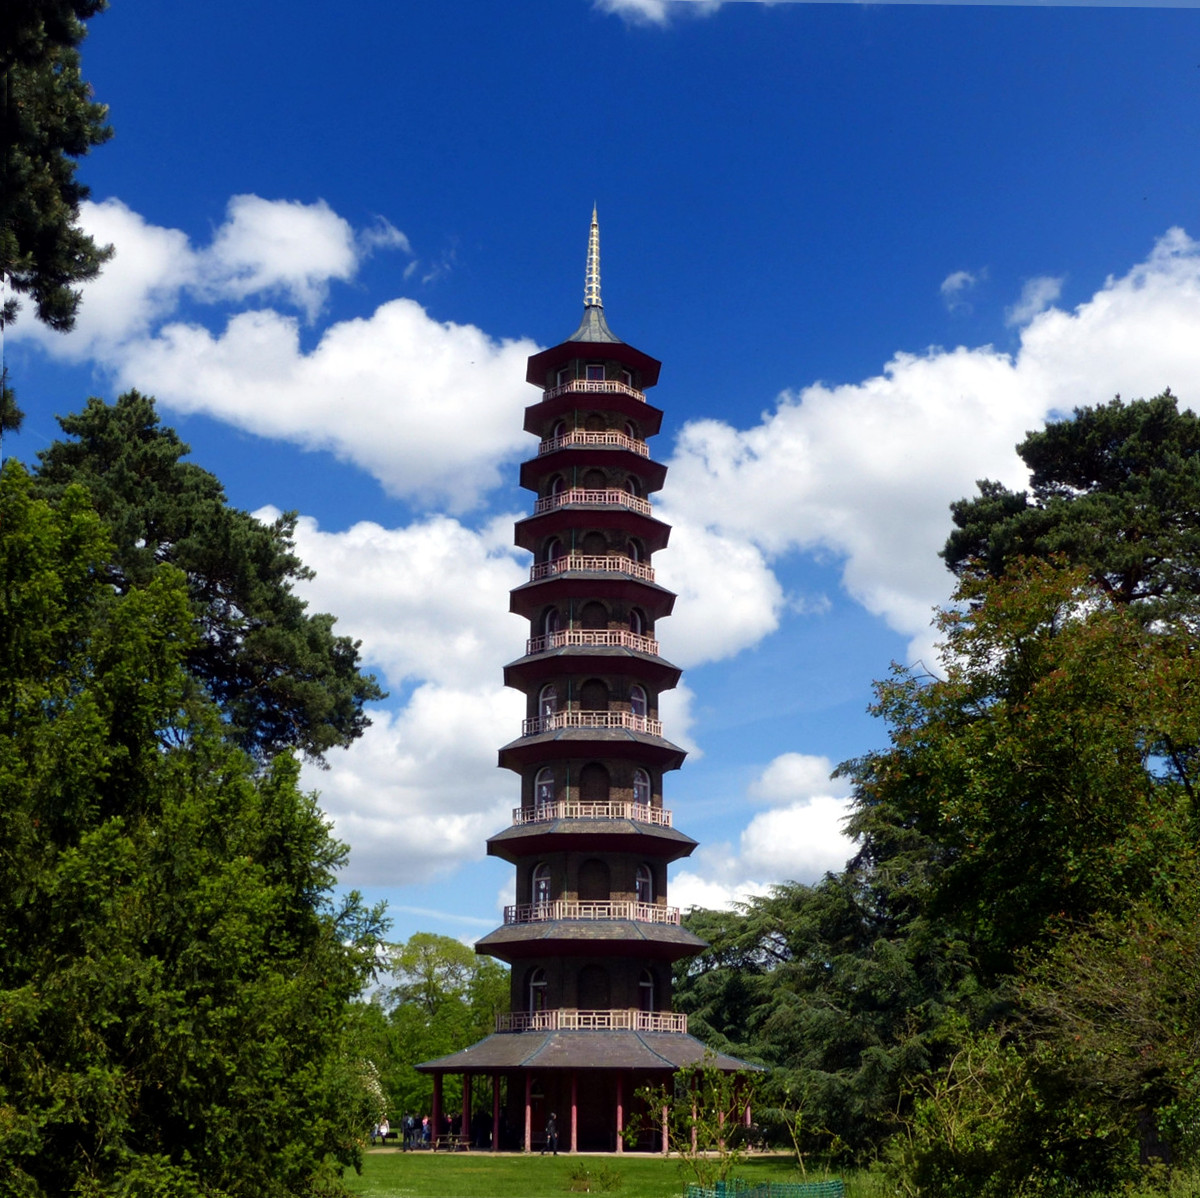 The Pagoda in Kew Gardens, London. Credit Marco Felhofer